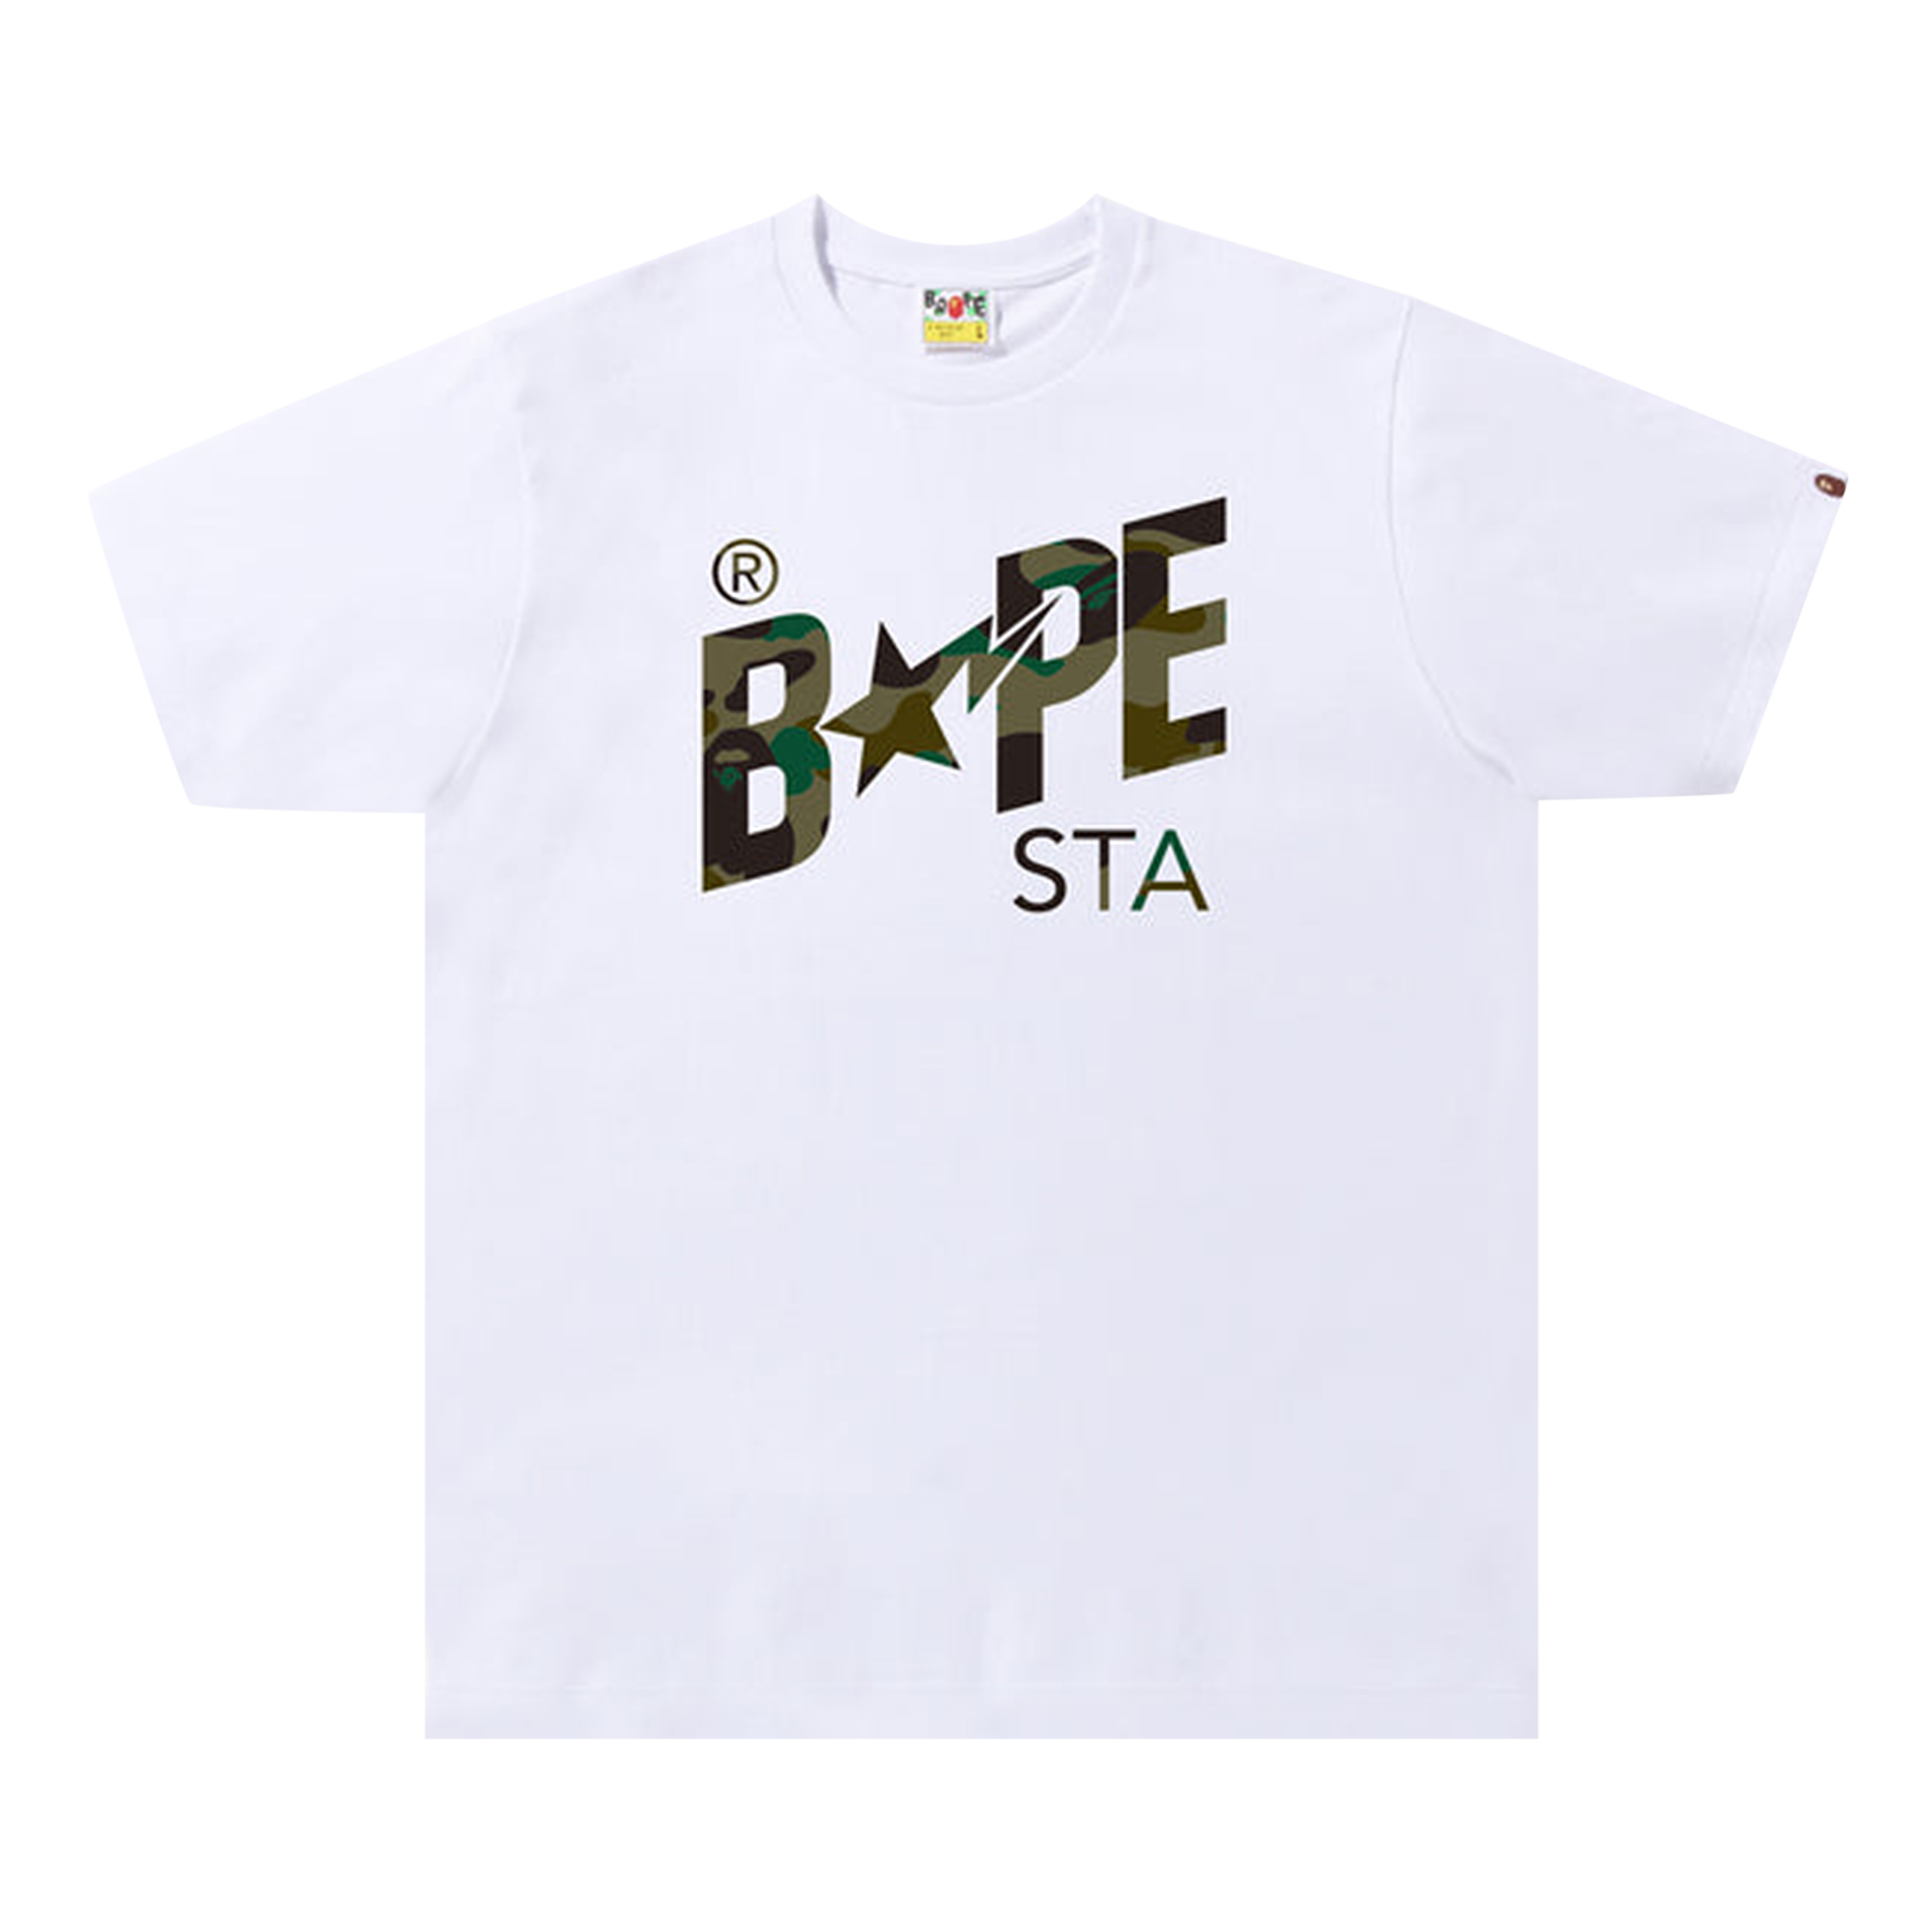 Pre-owned Bape Sta 1st Camo Logo Tee 'white/green'